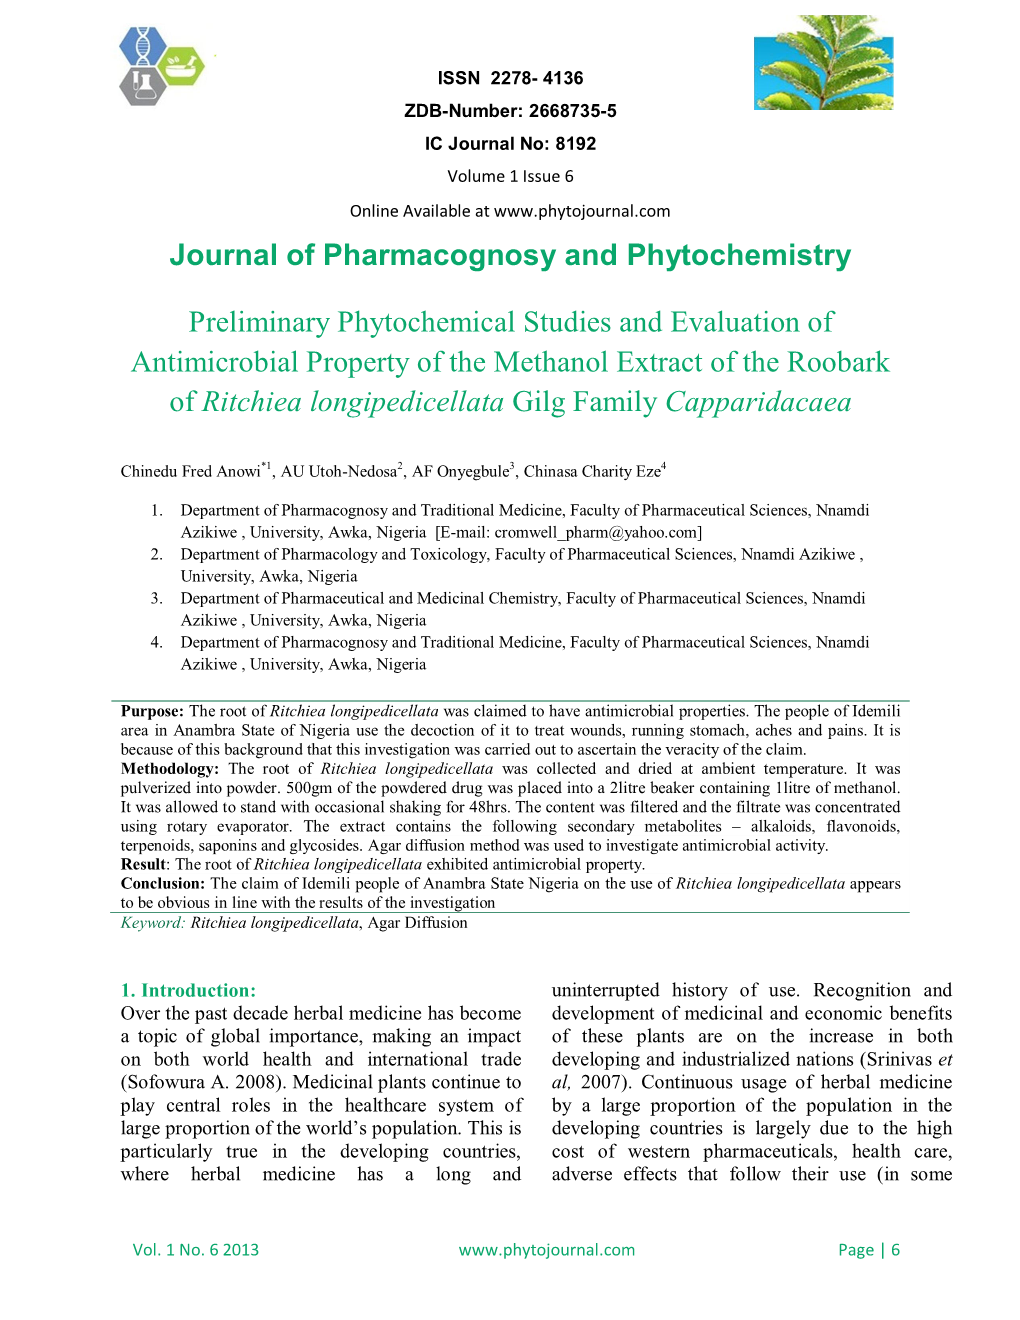 Journal of Pharmacognosy and Phytochemistry Preliminary